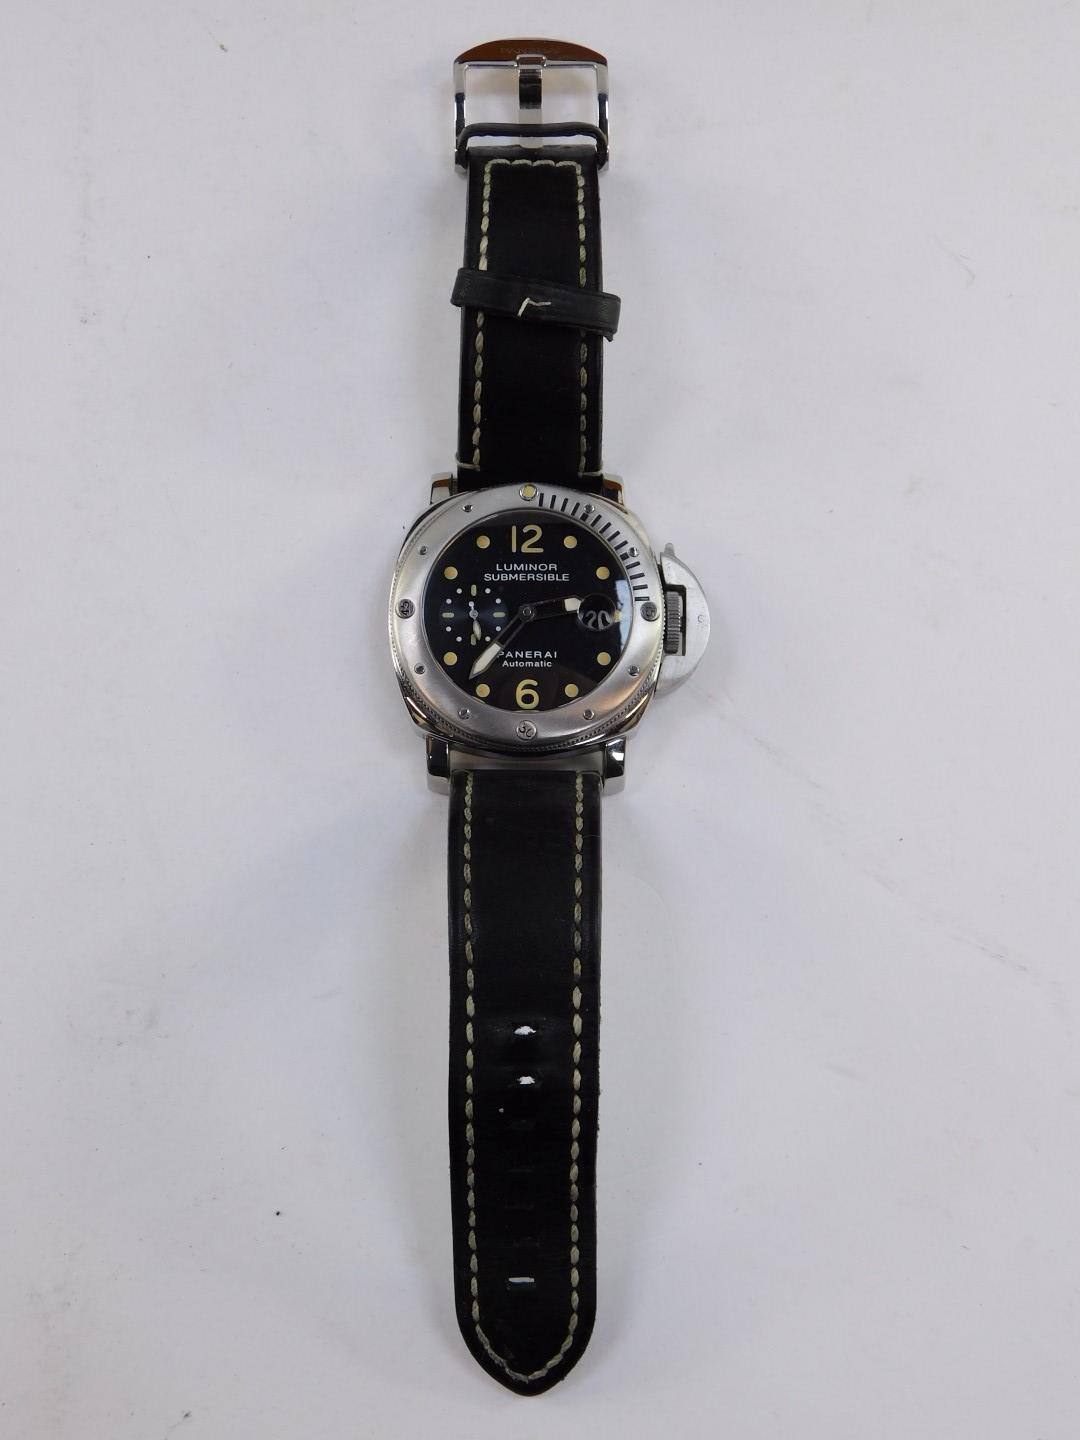 A Panerai Submersible gentleman's stainless steel cased wristwatch, Luminor submersible circular bla - Image 3 of 5